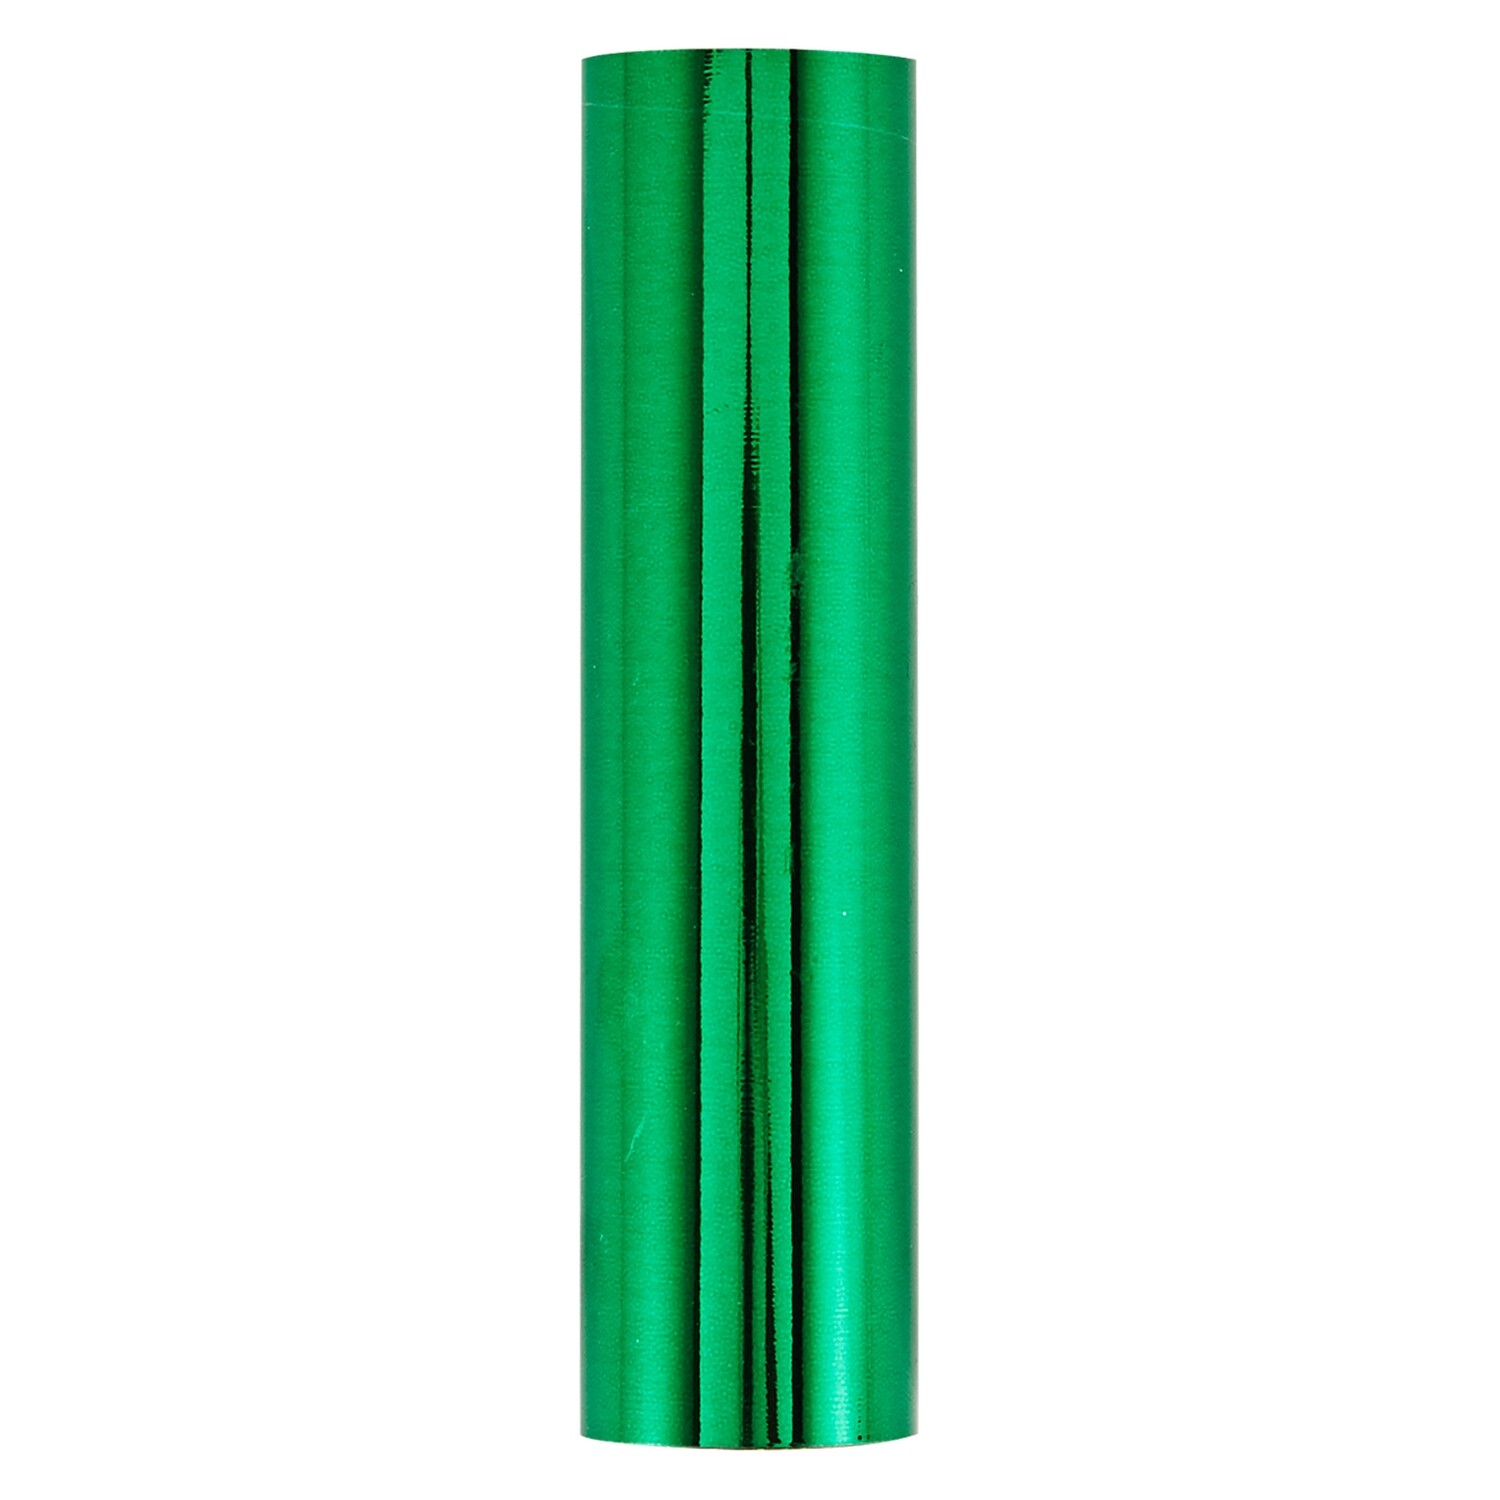 Spellbinders Glimmer Hot Foil Roll - Veridian Green